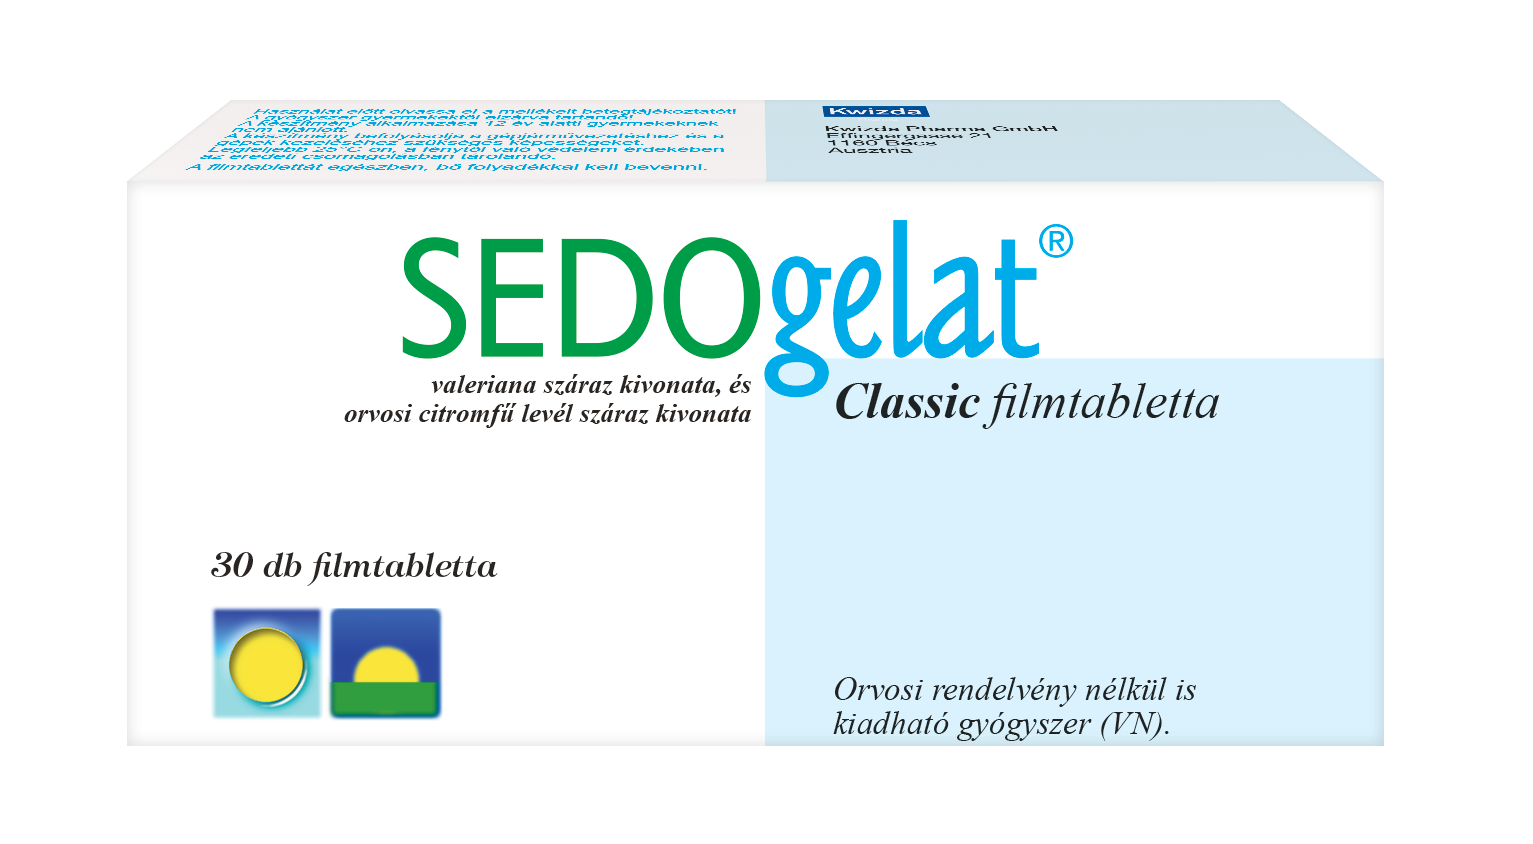 Sedogelat Classic filmtabletta /03